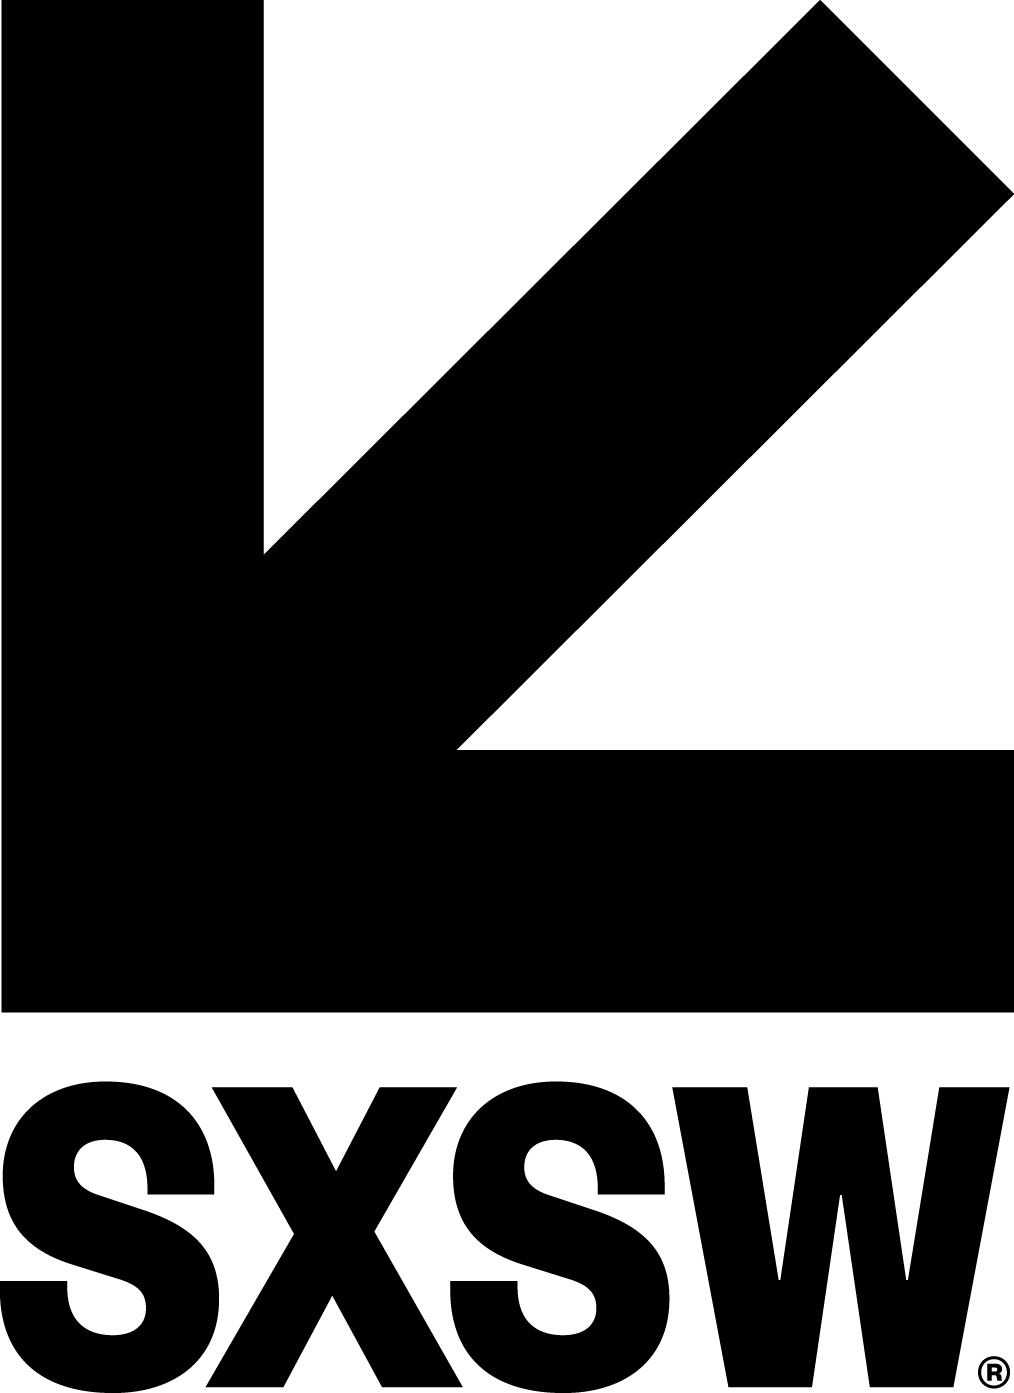 SXSW - South by Southwest logo